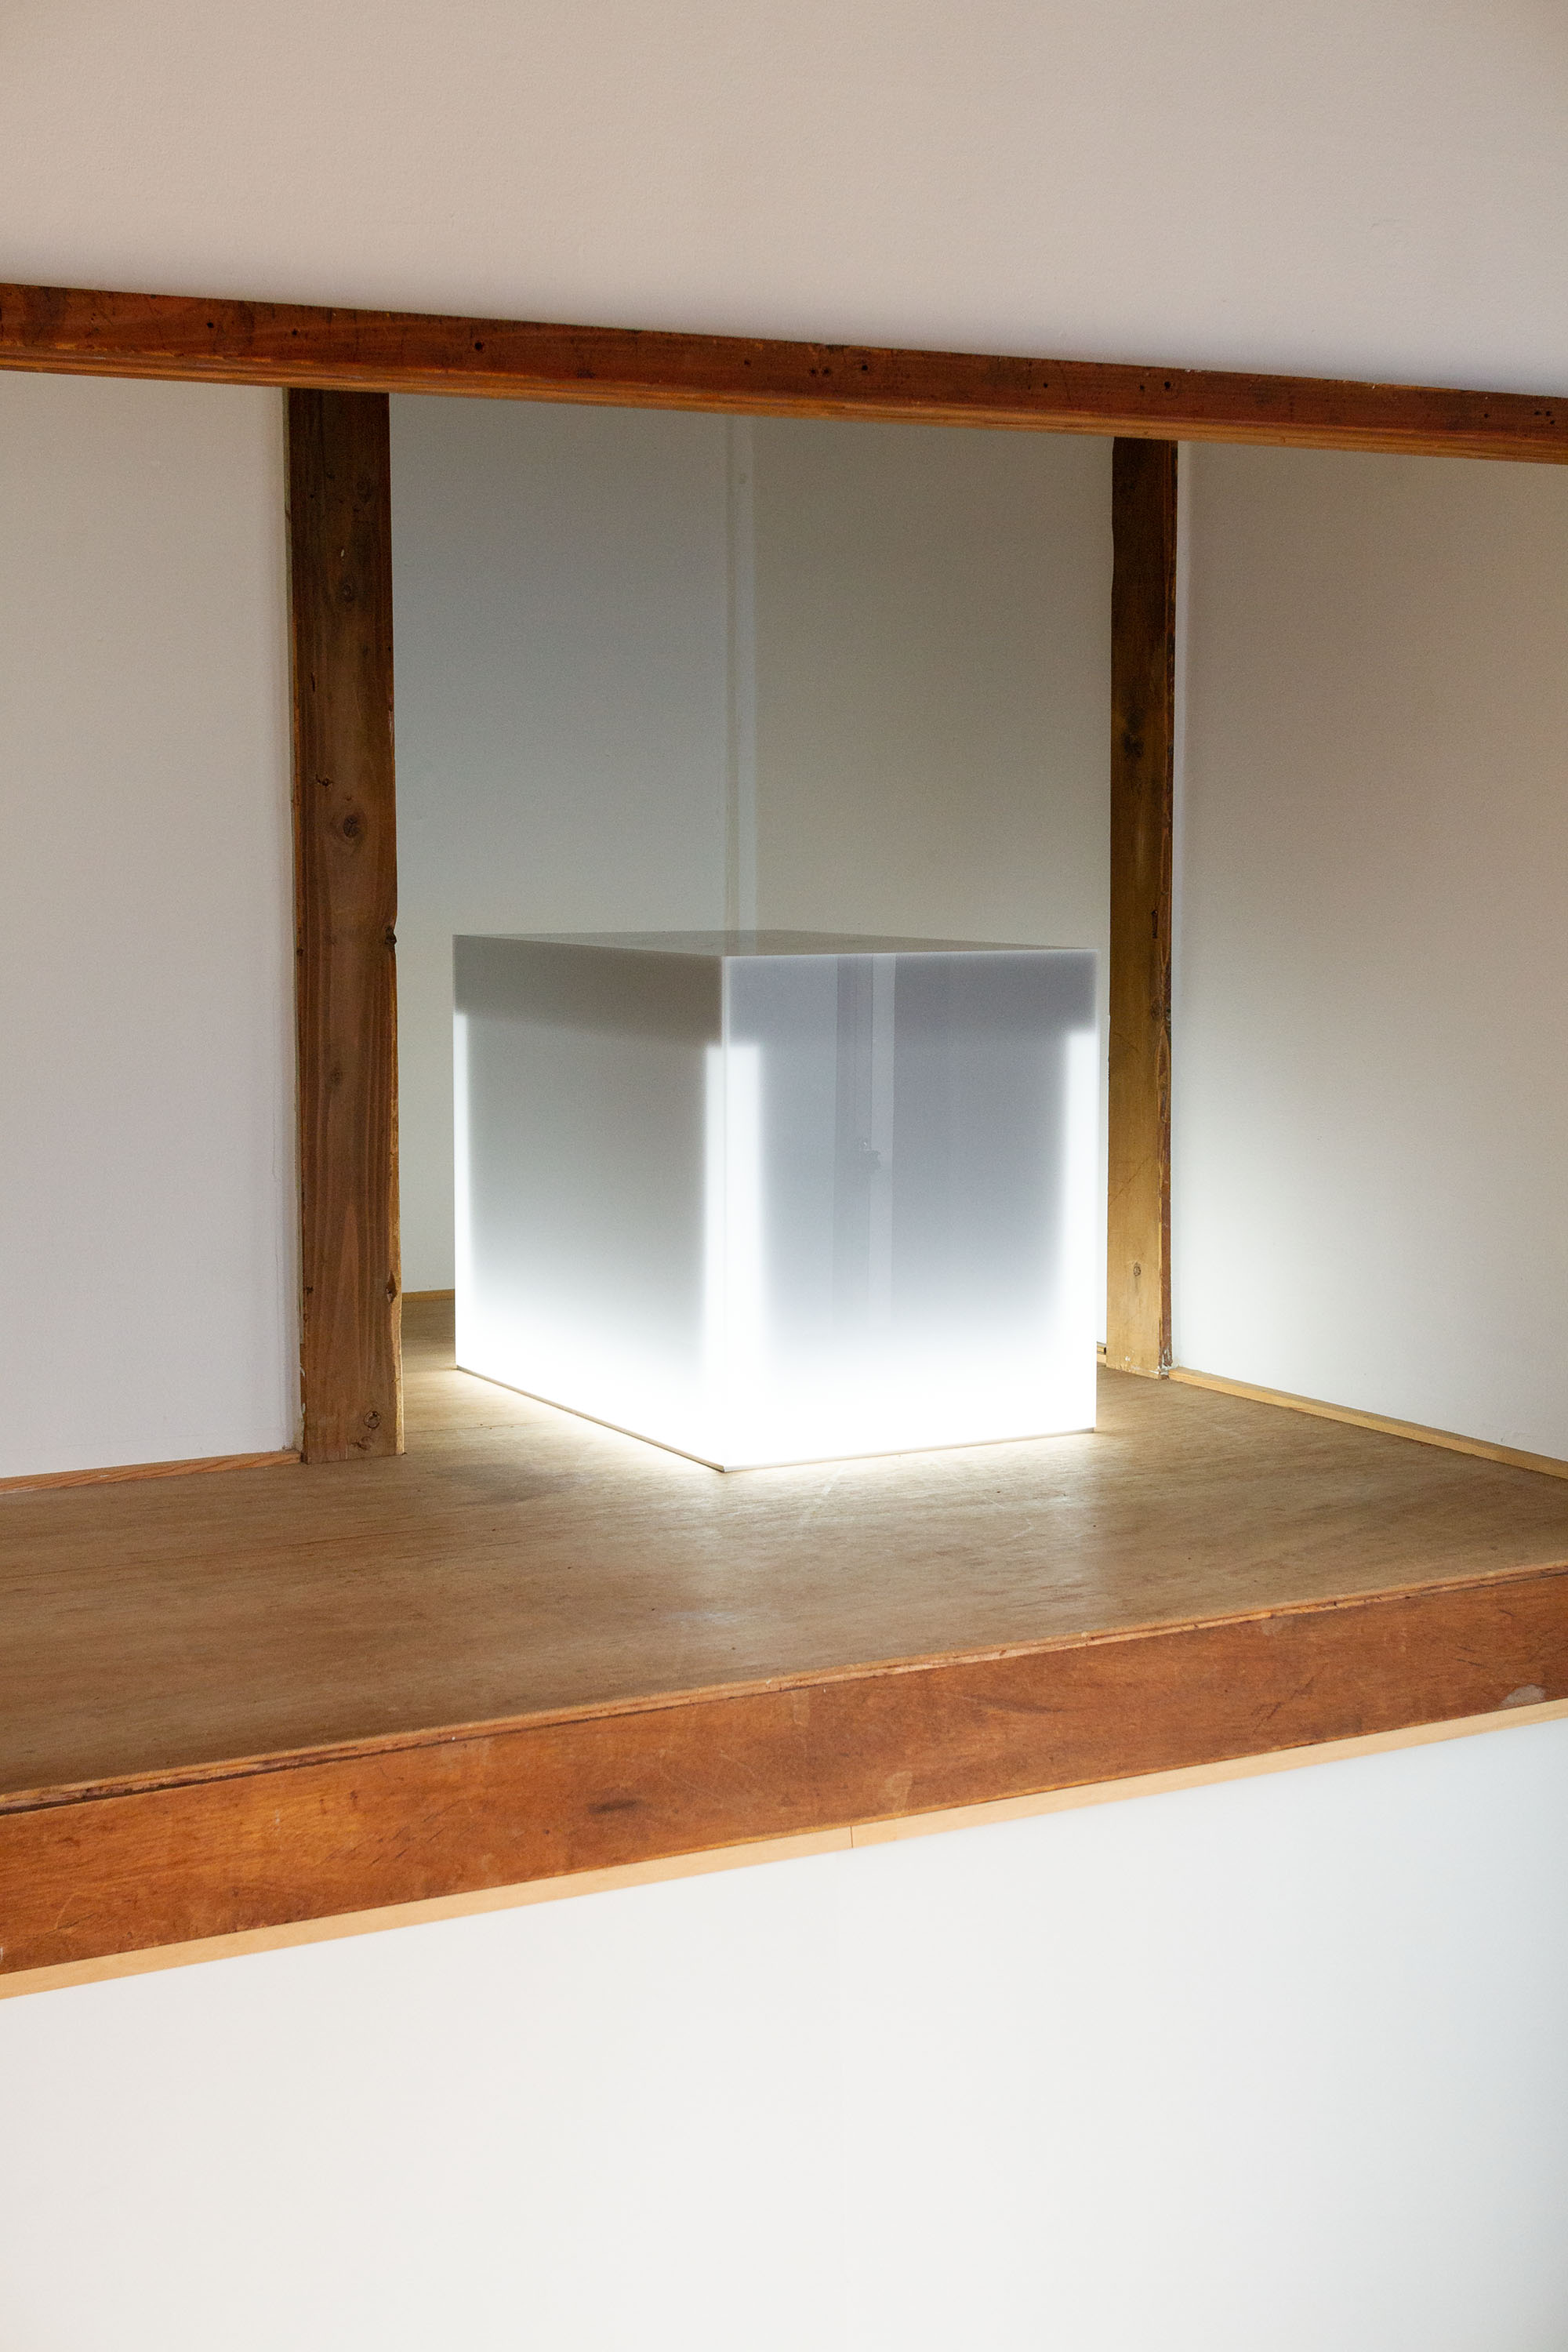 Soshi Matsunobe - Dimensional Box, 2015, acrylic resin, plywood, LED (installation view)